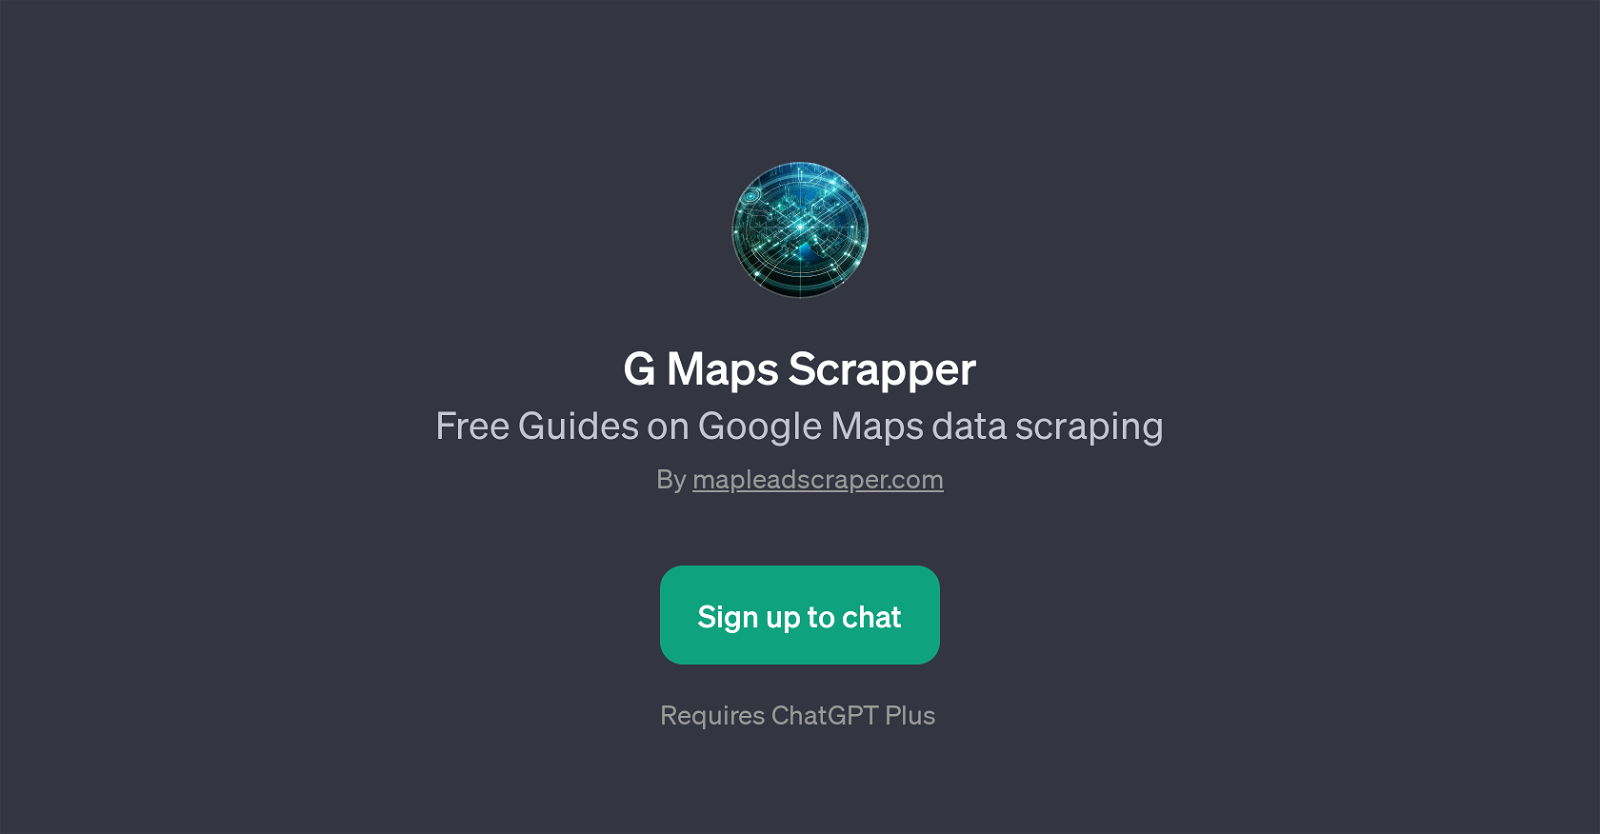 G Maps Scrapper website